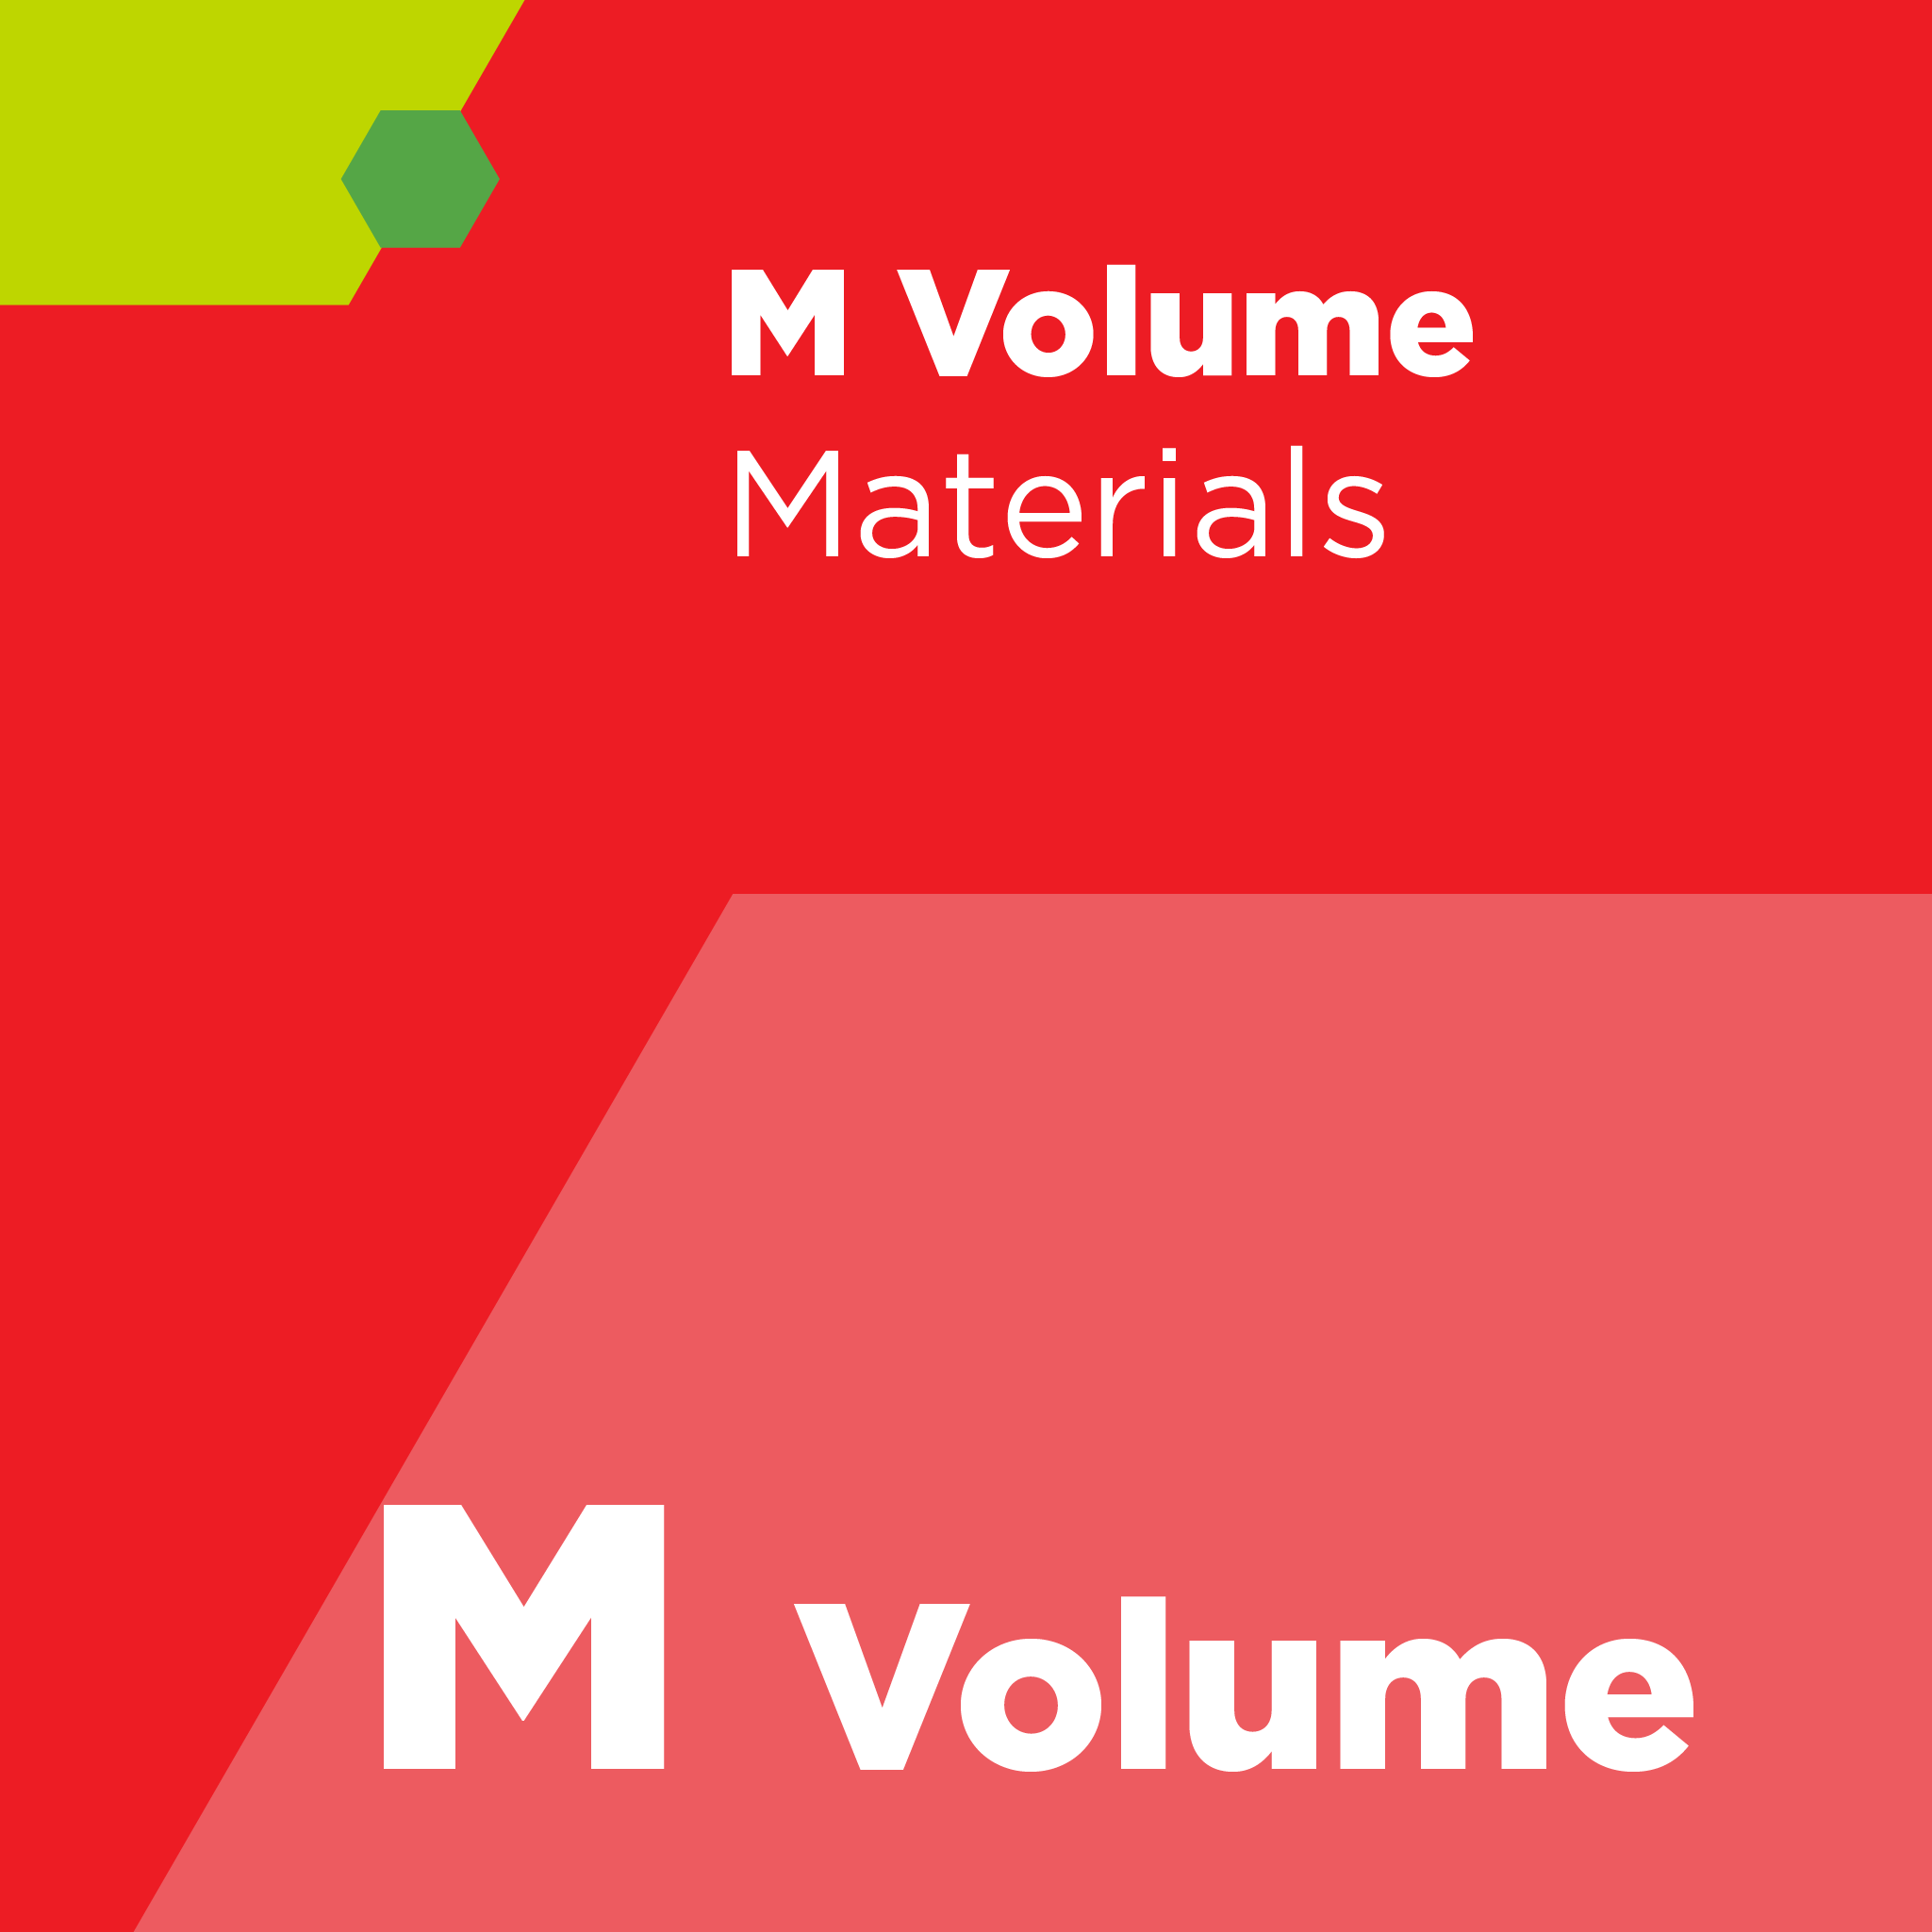 M02300 - SEMI M23 - Specification for Polished Monocrystalline Indium Phosphide Wafers